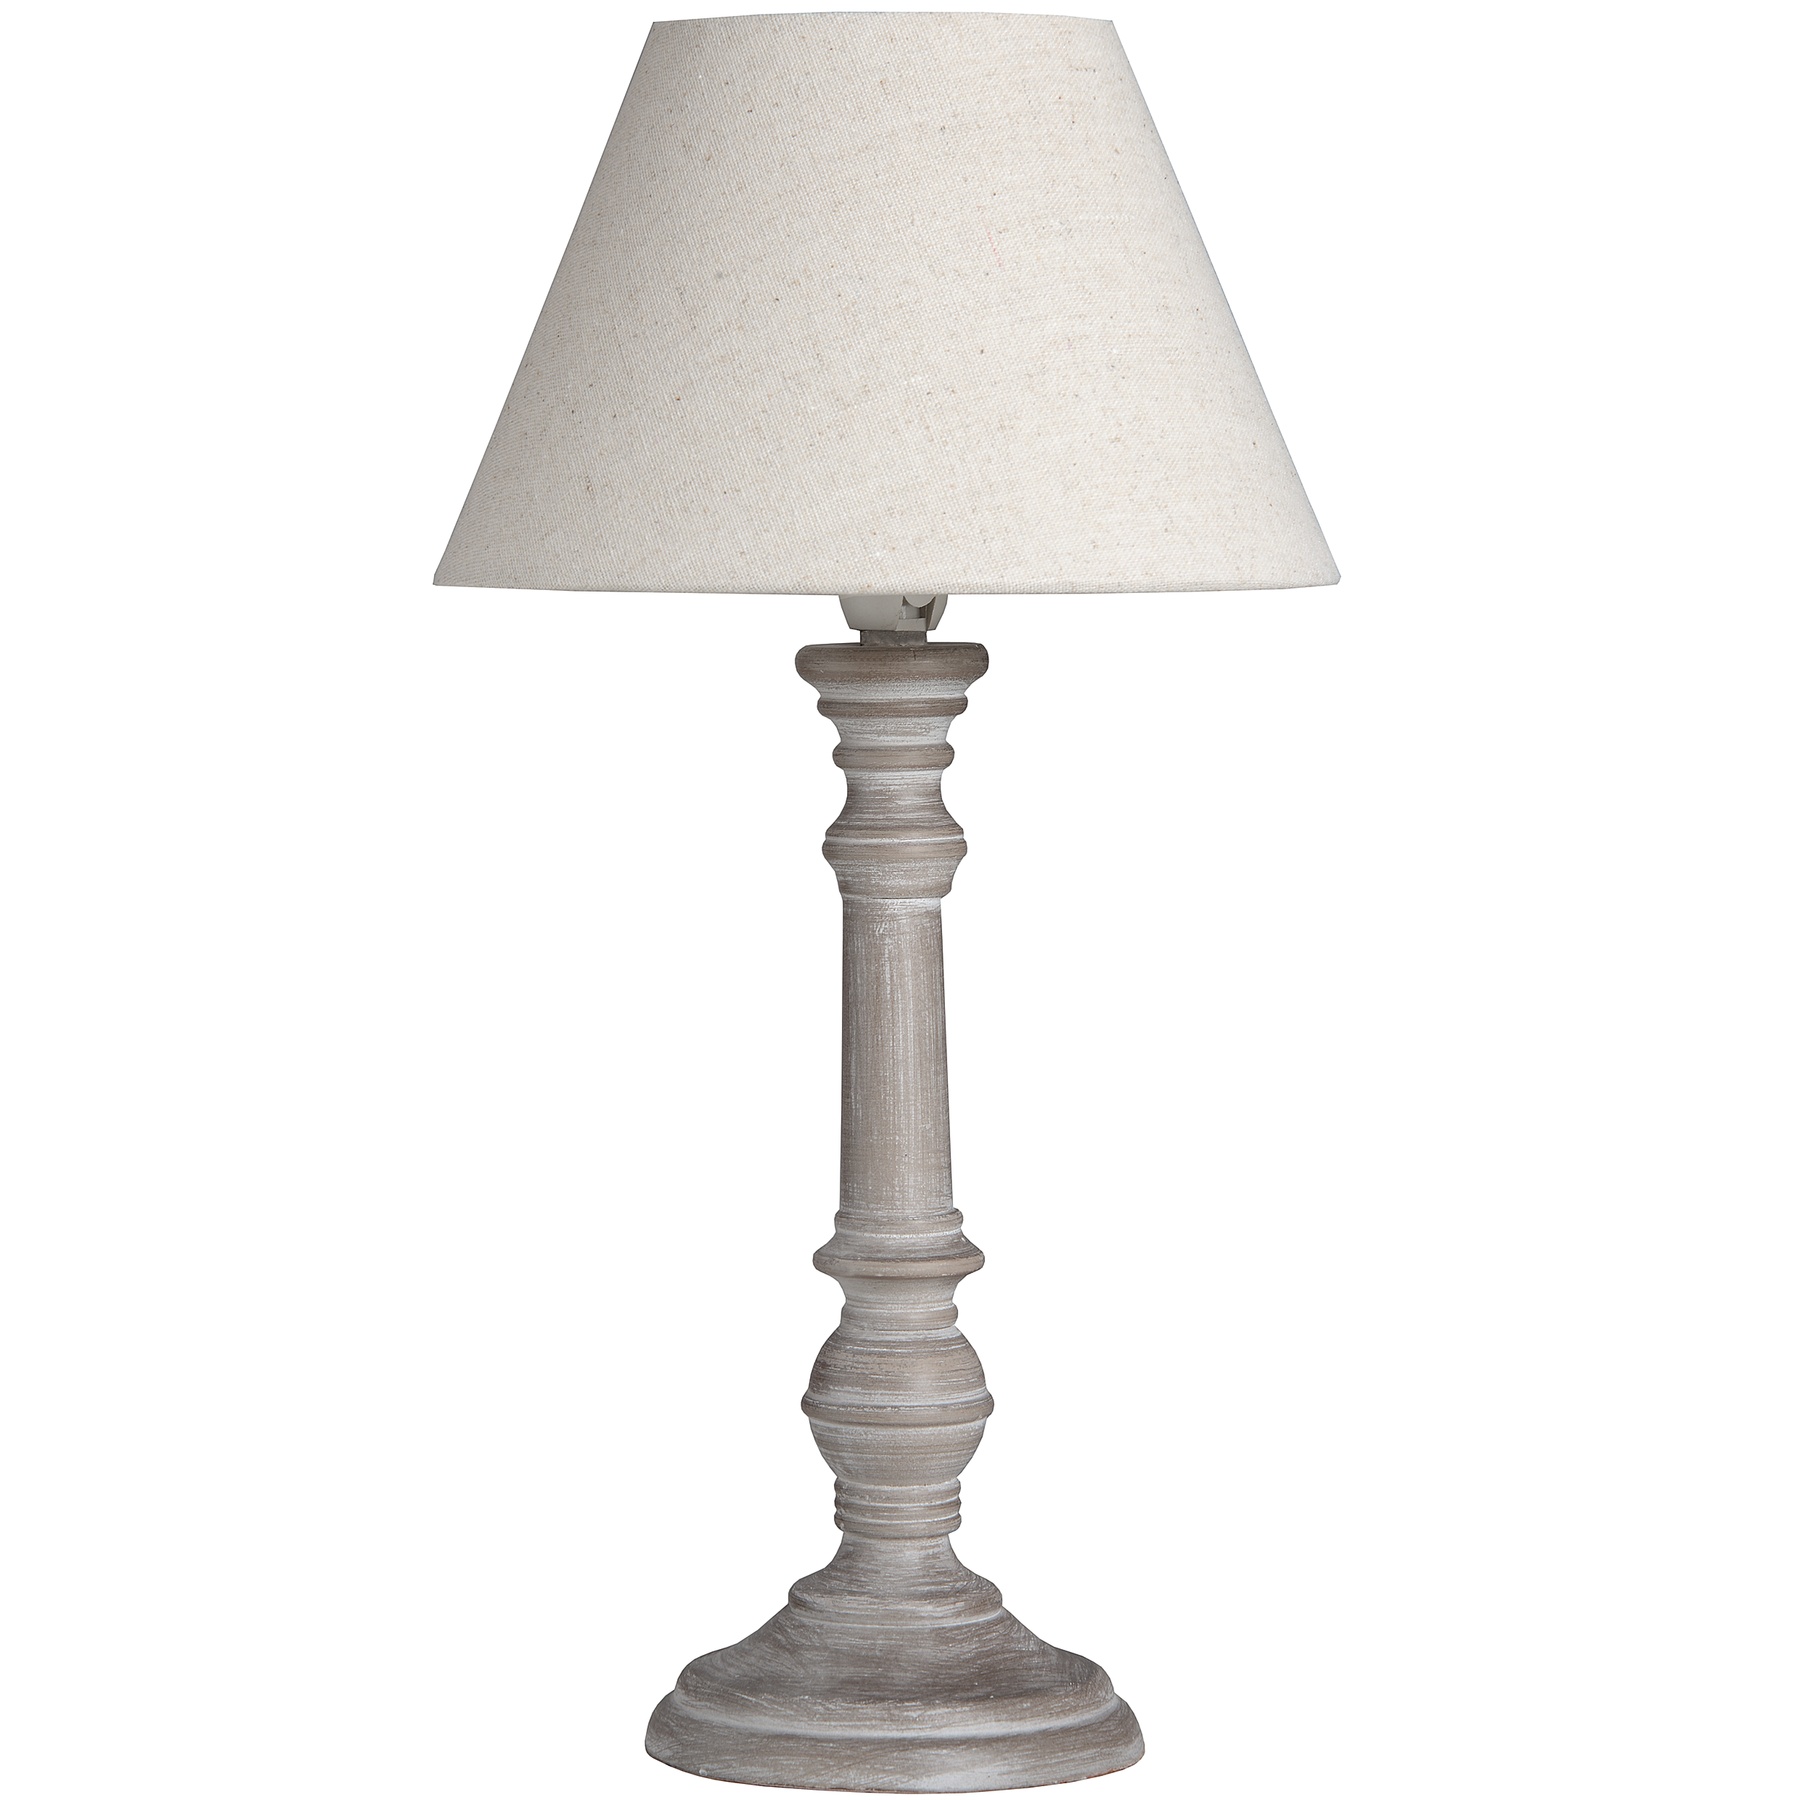 Pella Table Lamp - Image 1